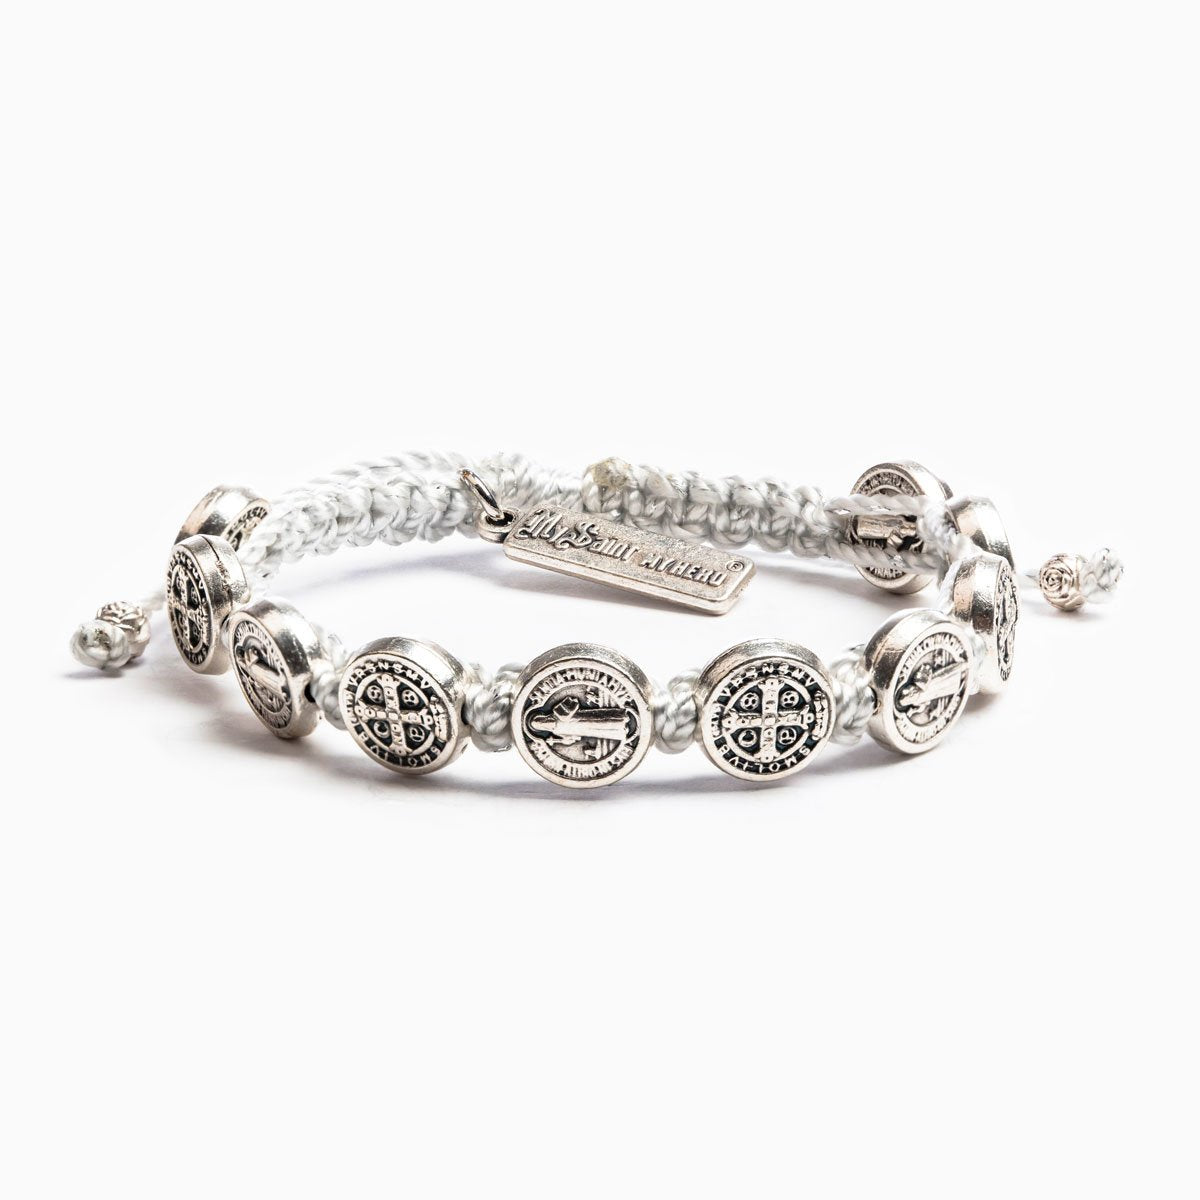 Benedictine Blessing Bracelet - Silver